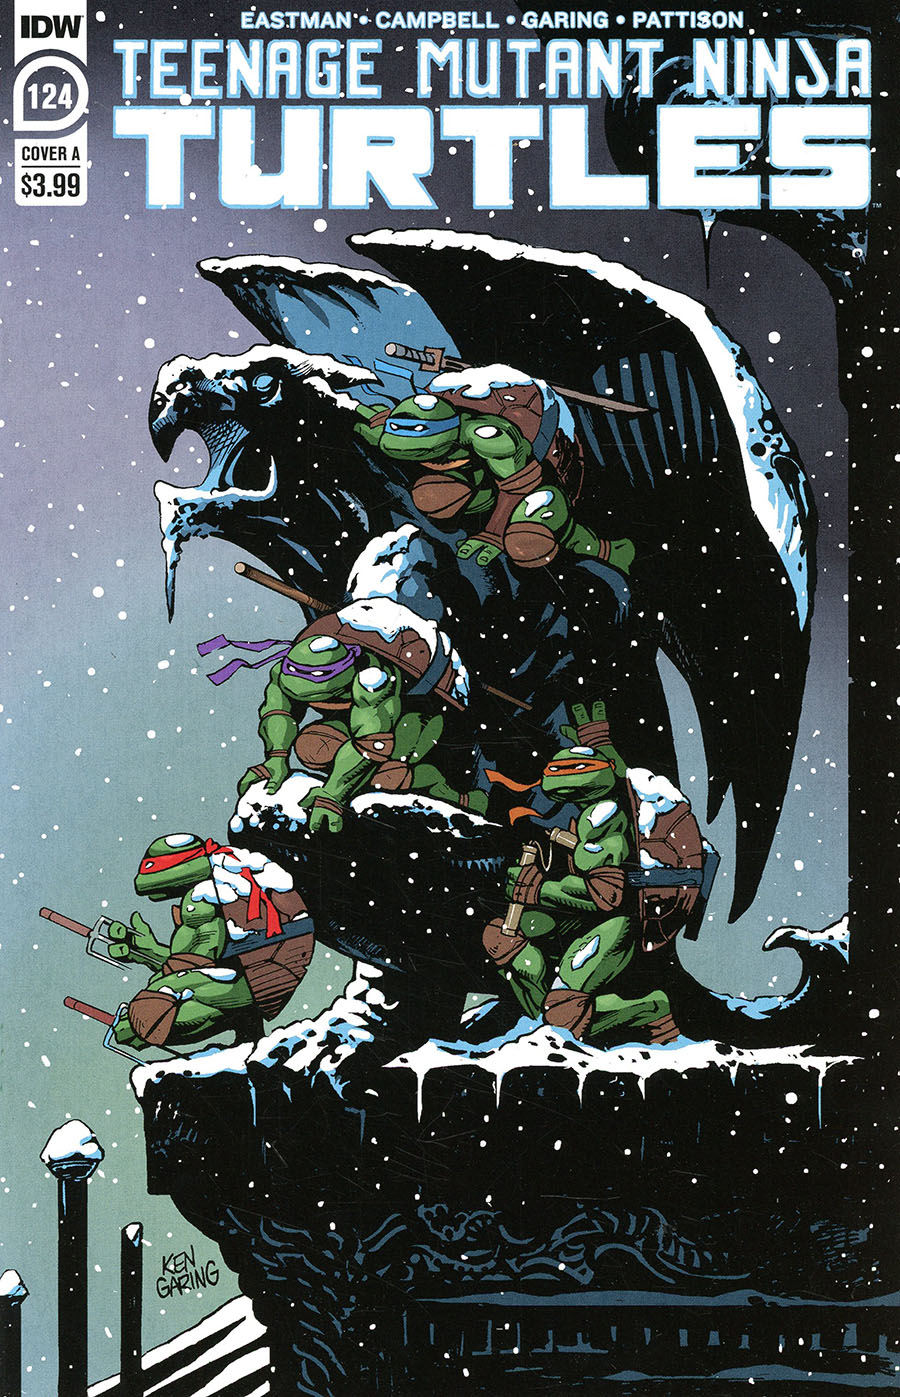 Teenage Mutant Ninja Turtles Vol 5 #124 Cover A Regular Ken Garing Cover